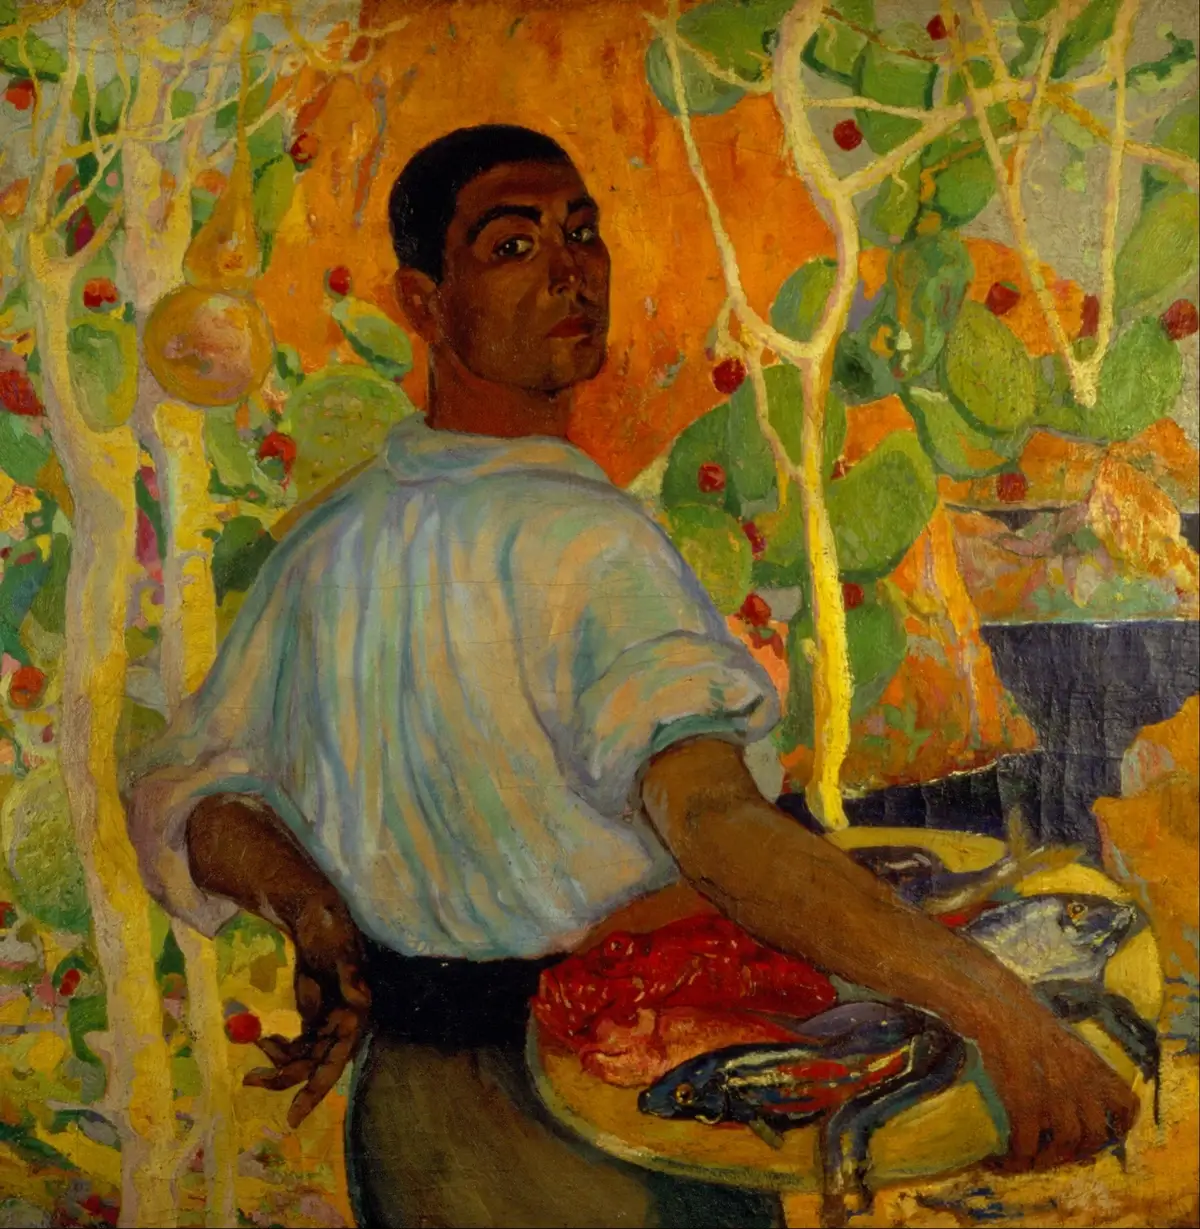 Roberto Montenegro, "Majorcan Fisherman", 1915